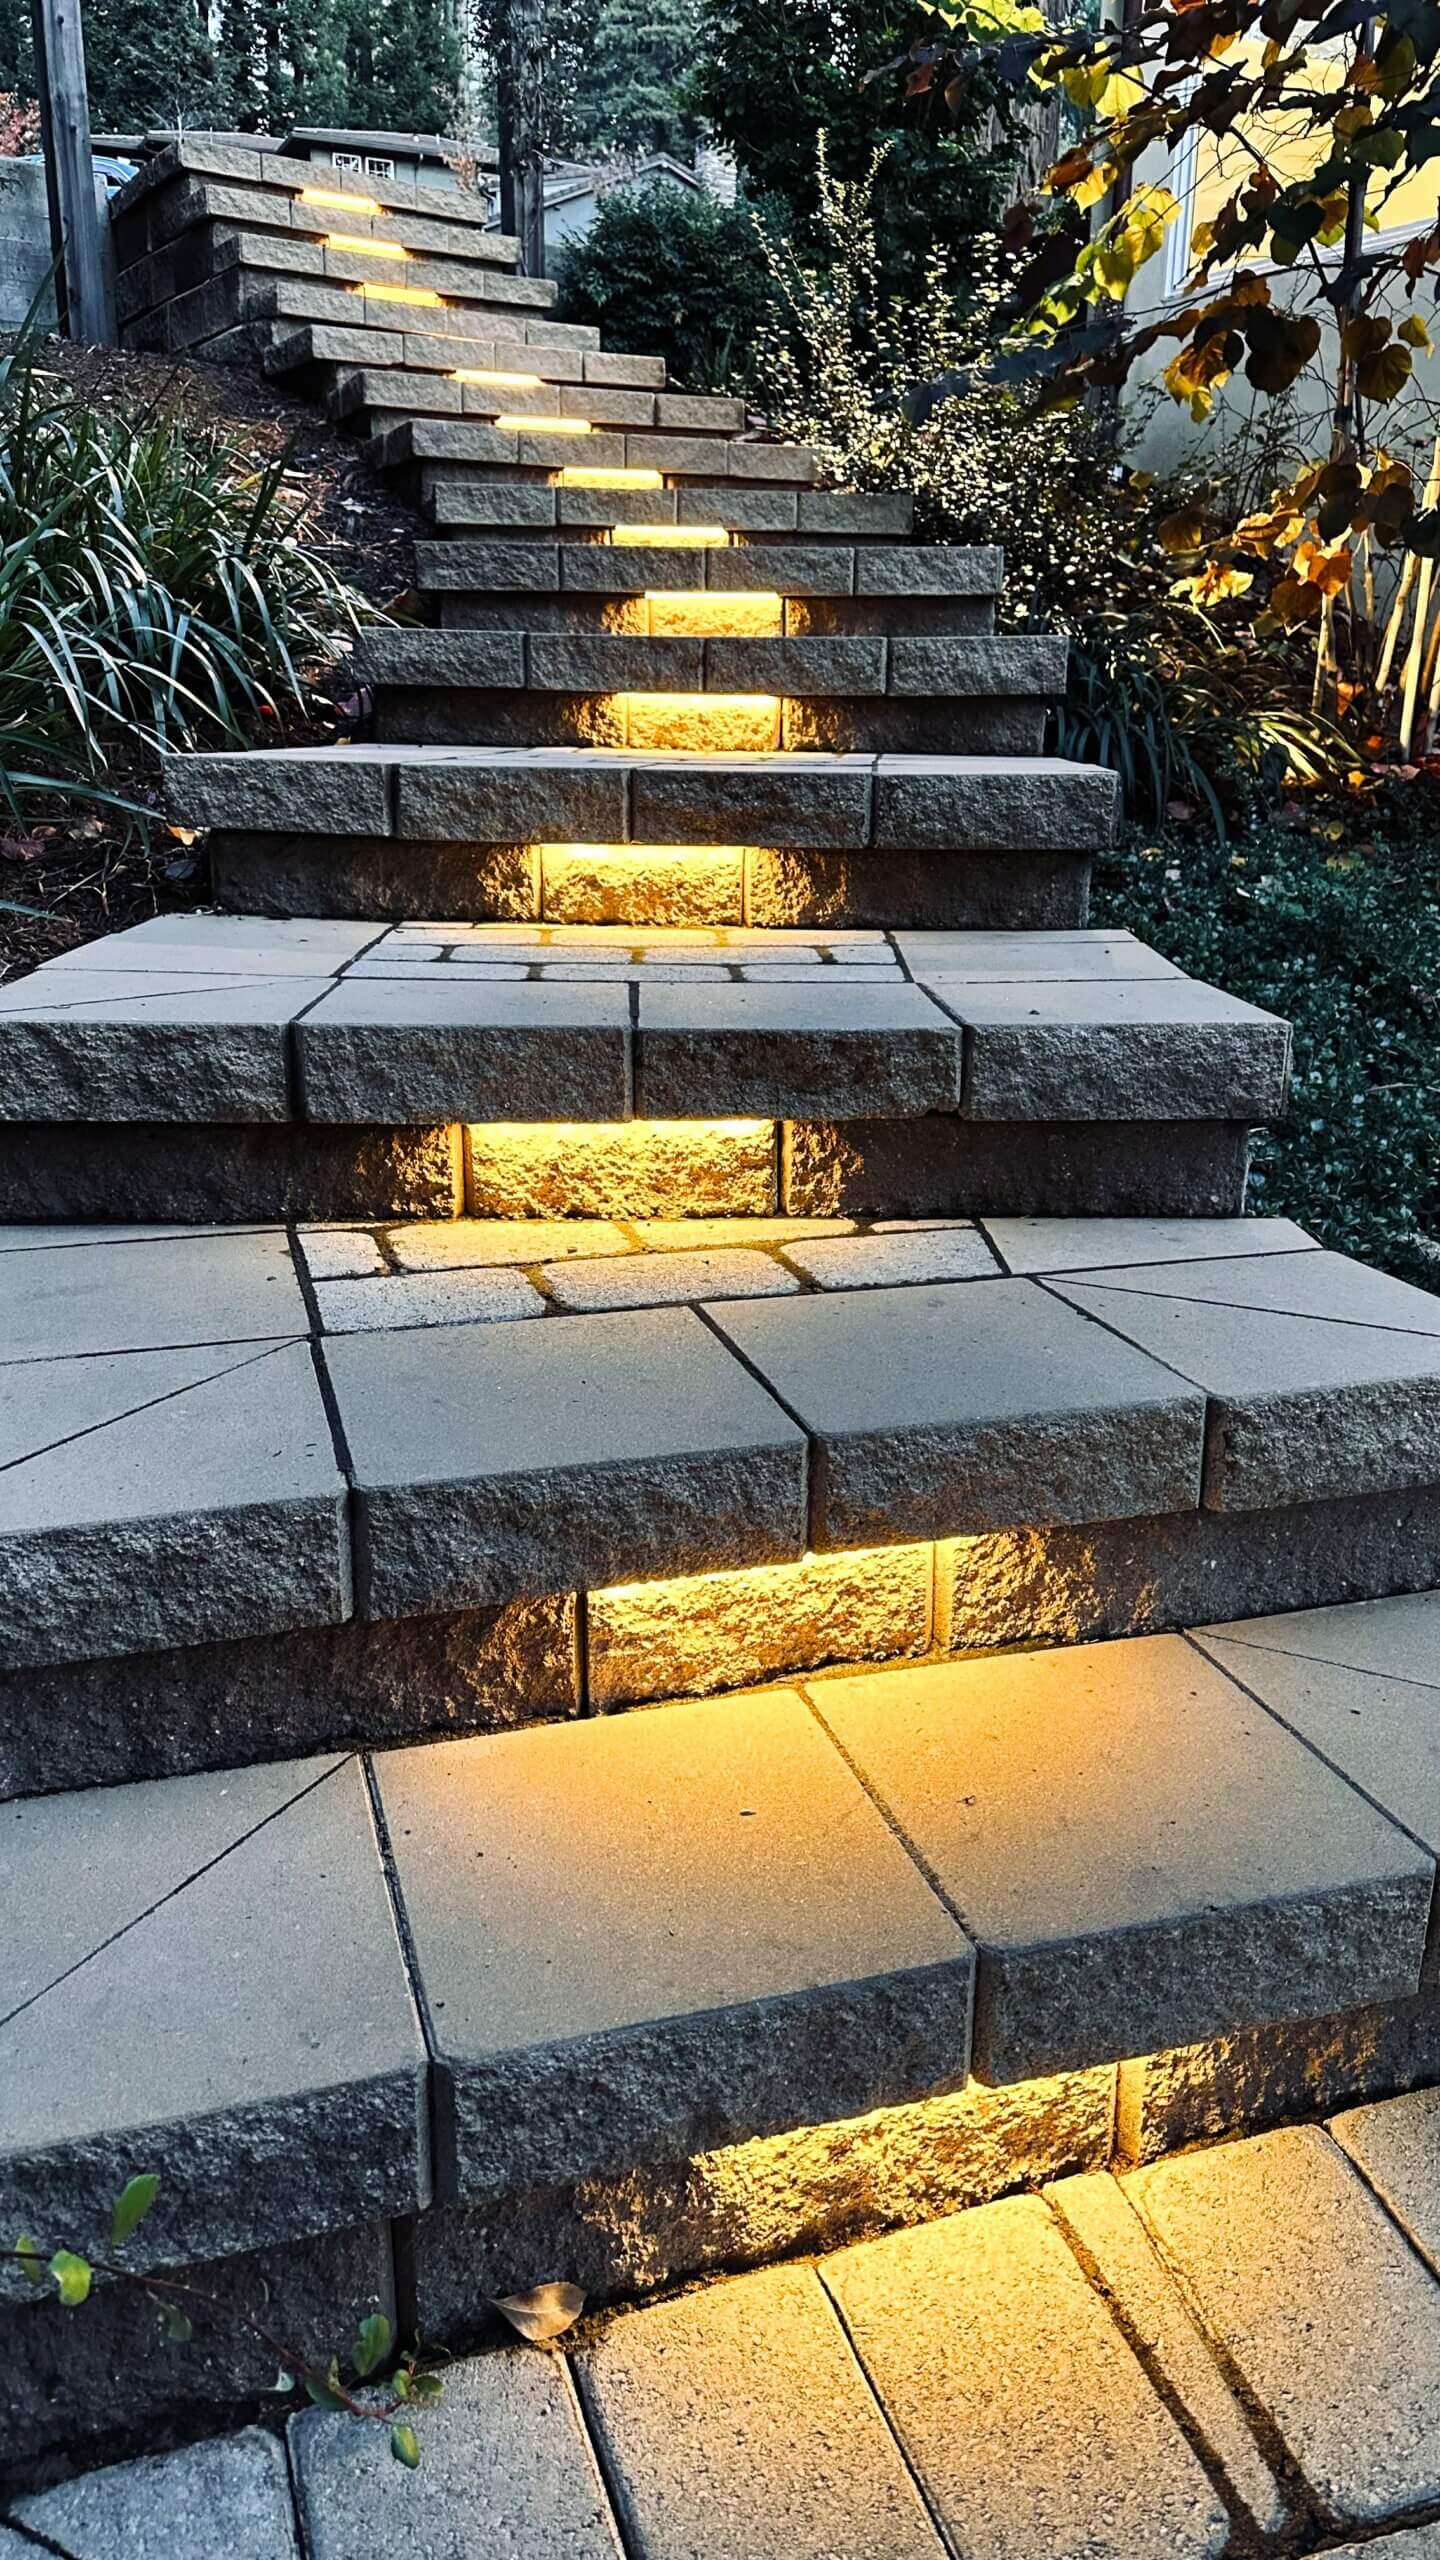 Stone steps going up steep hillside yard with underlighting